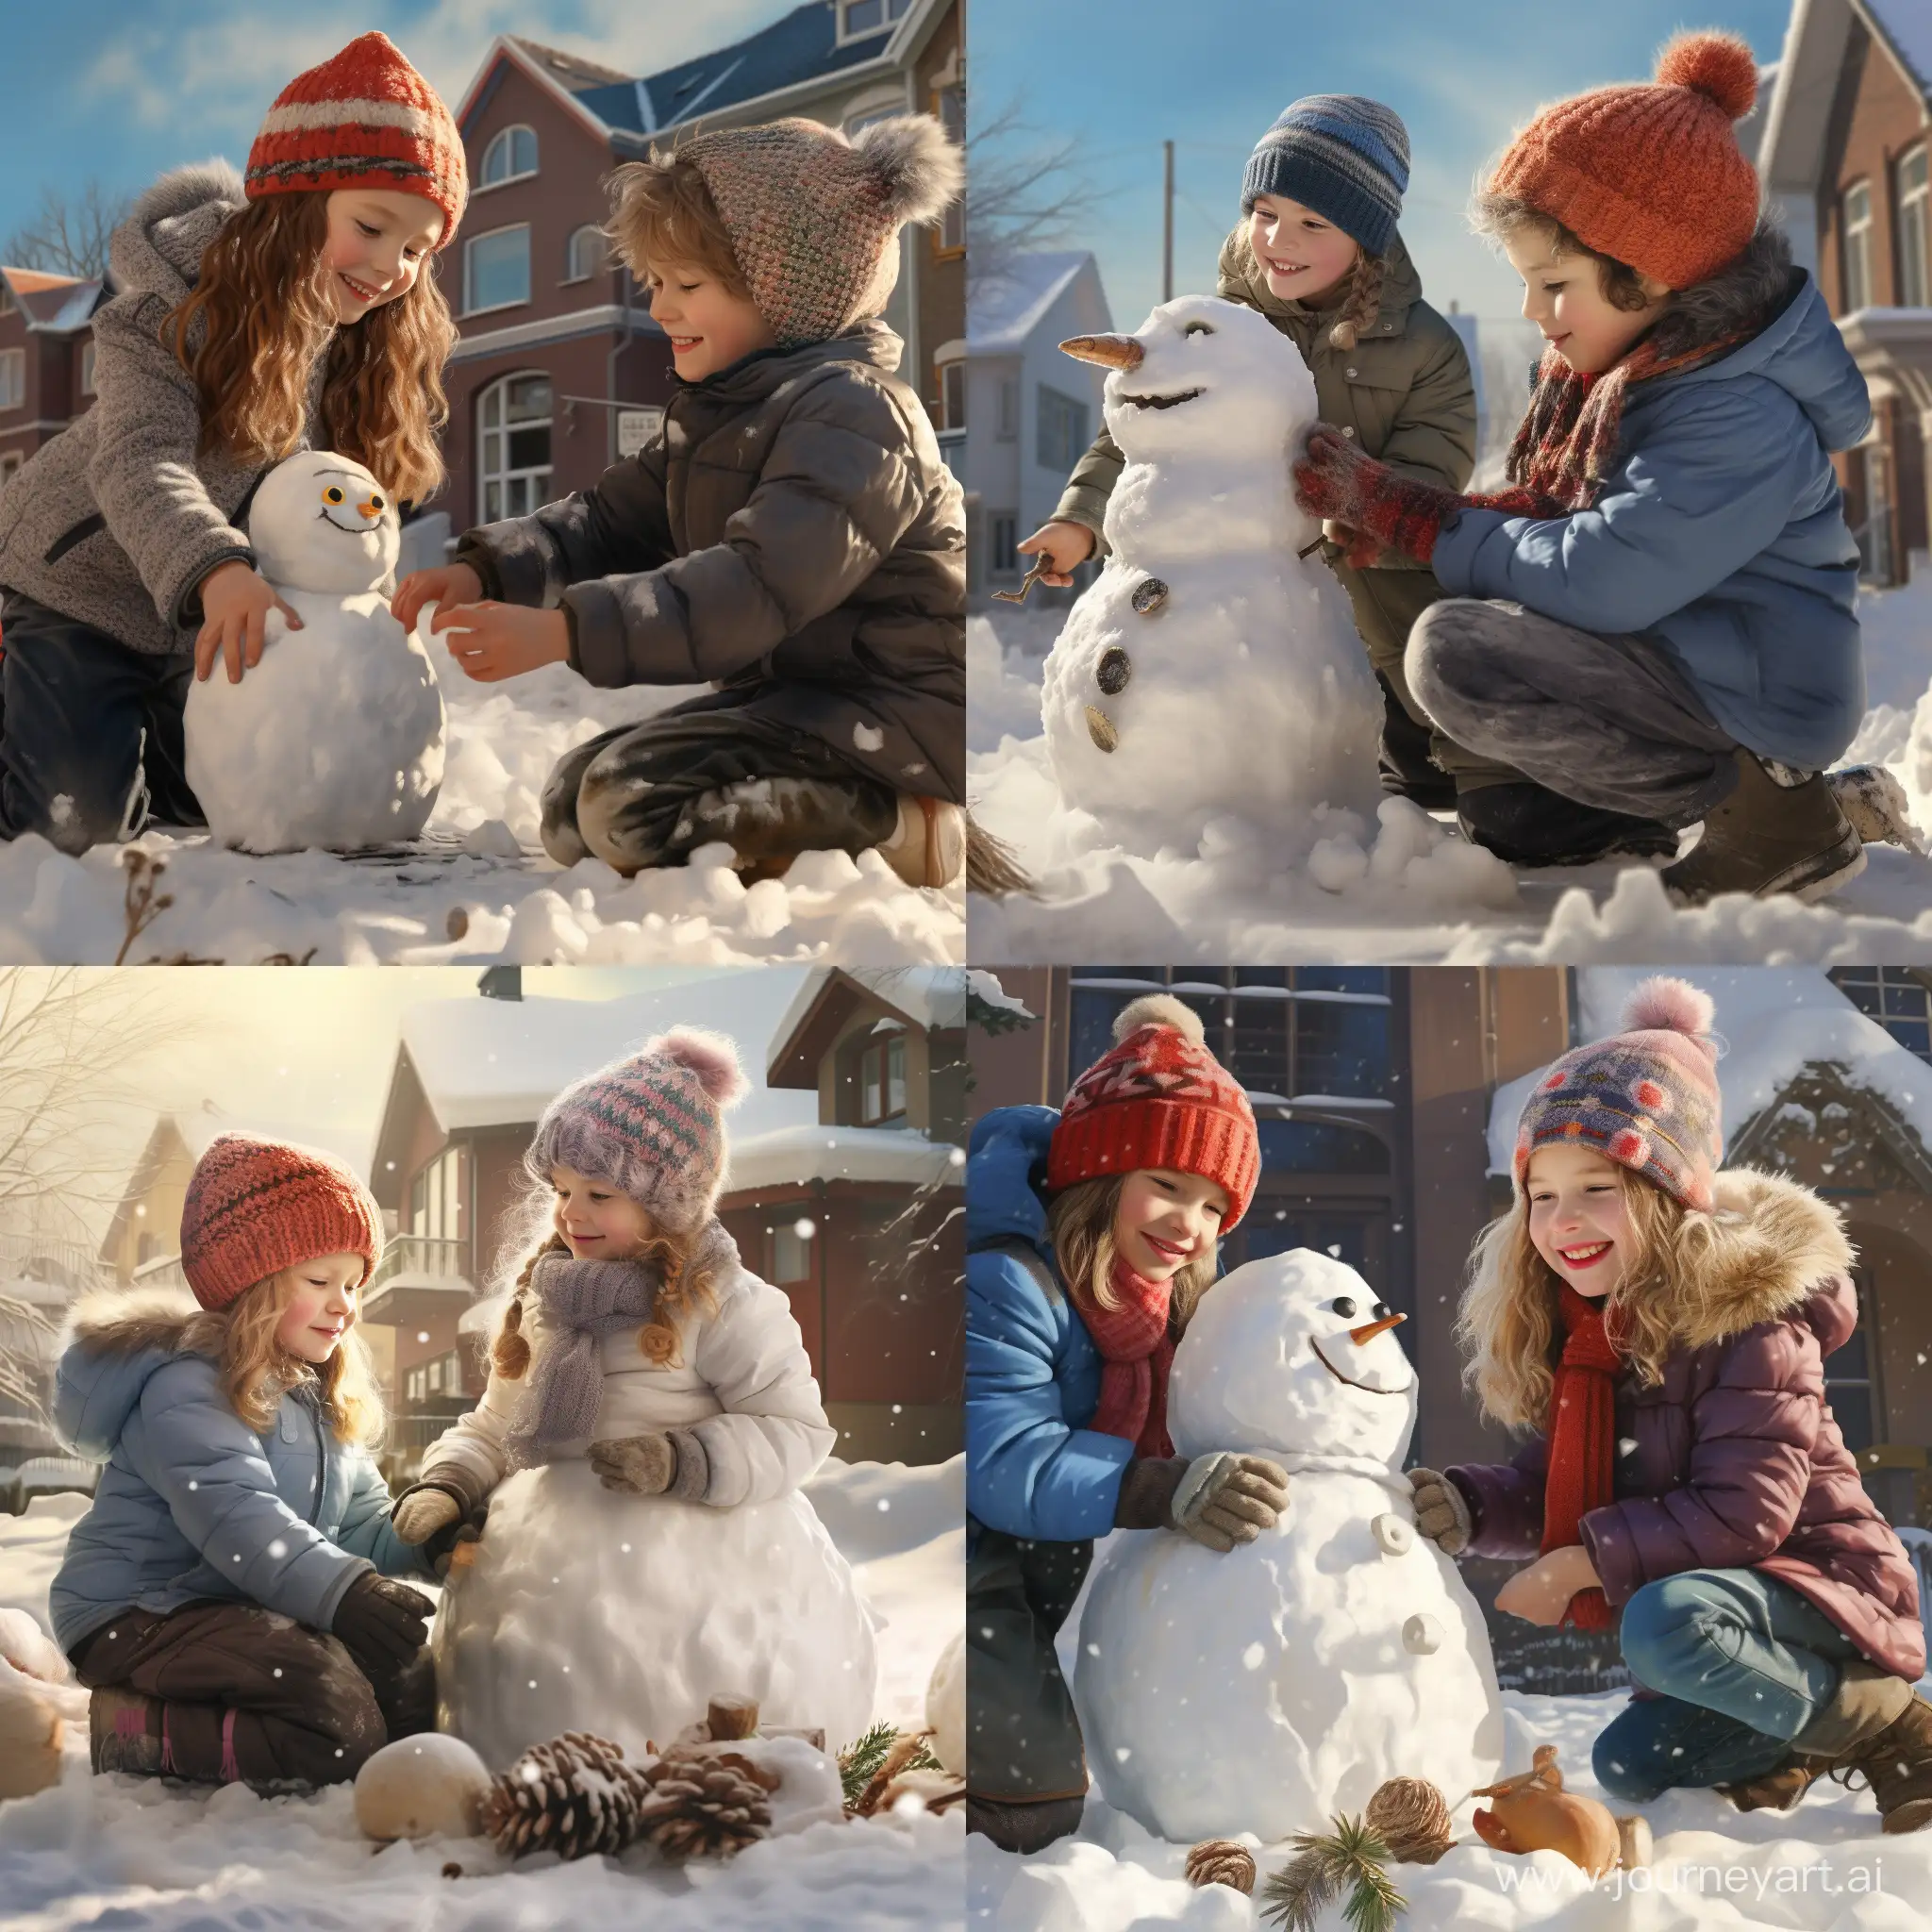 Joyful-Winter-Scene-Children-Building-Snowman-in-City-Yard